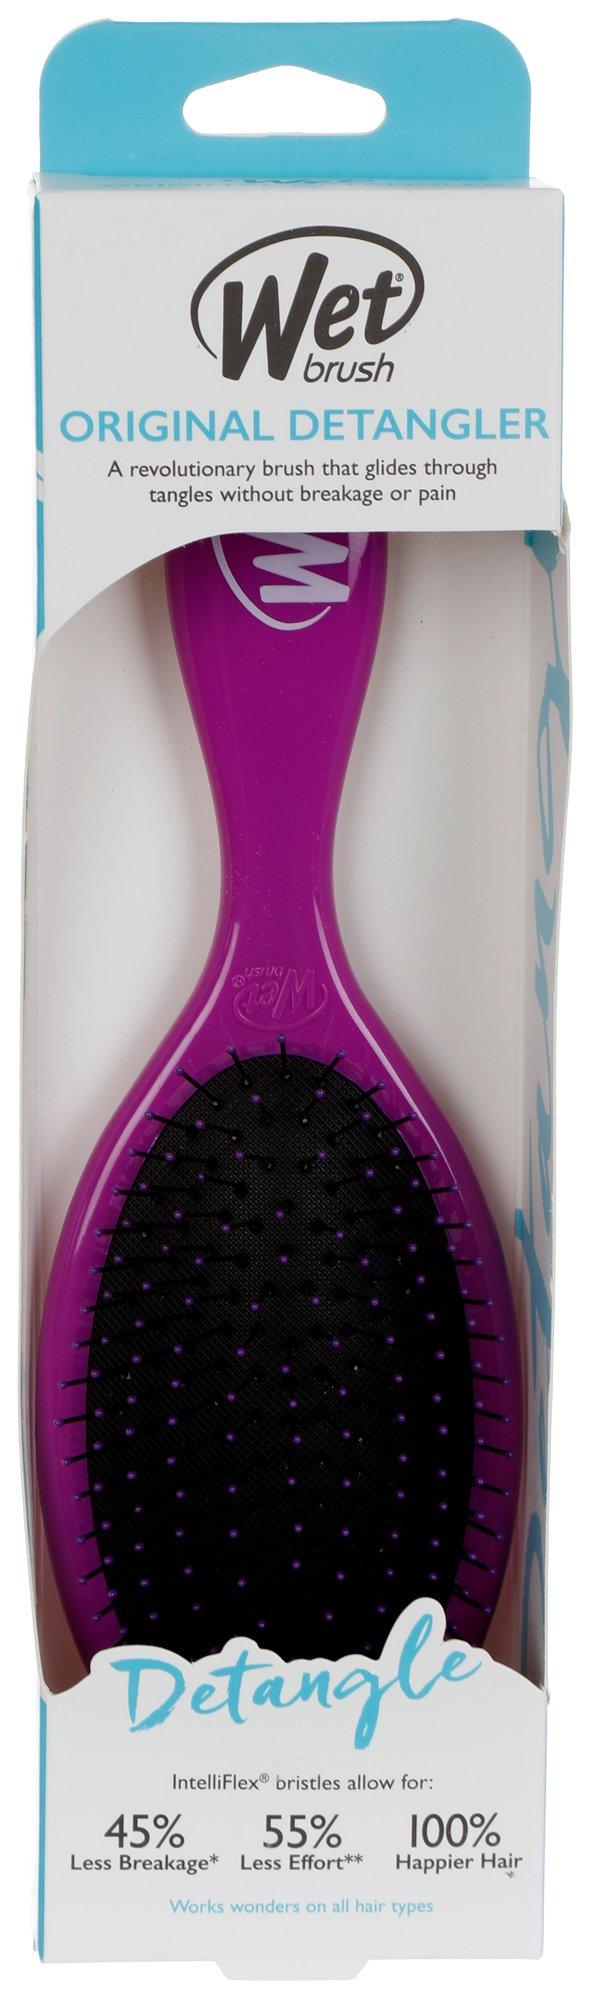 5pk Hair Brush Set for Women | Professional Pink Hairdressing Salon Styling  Gift